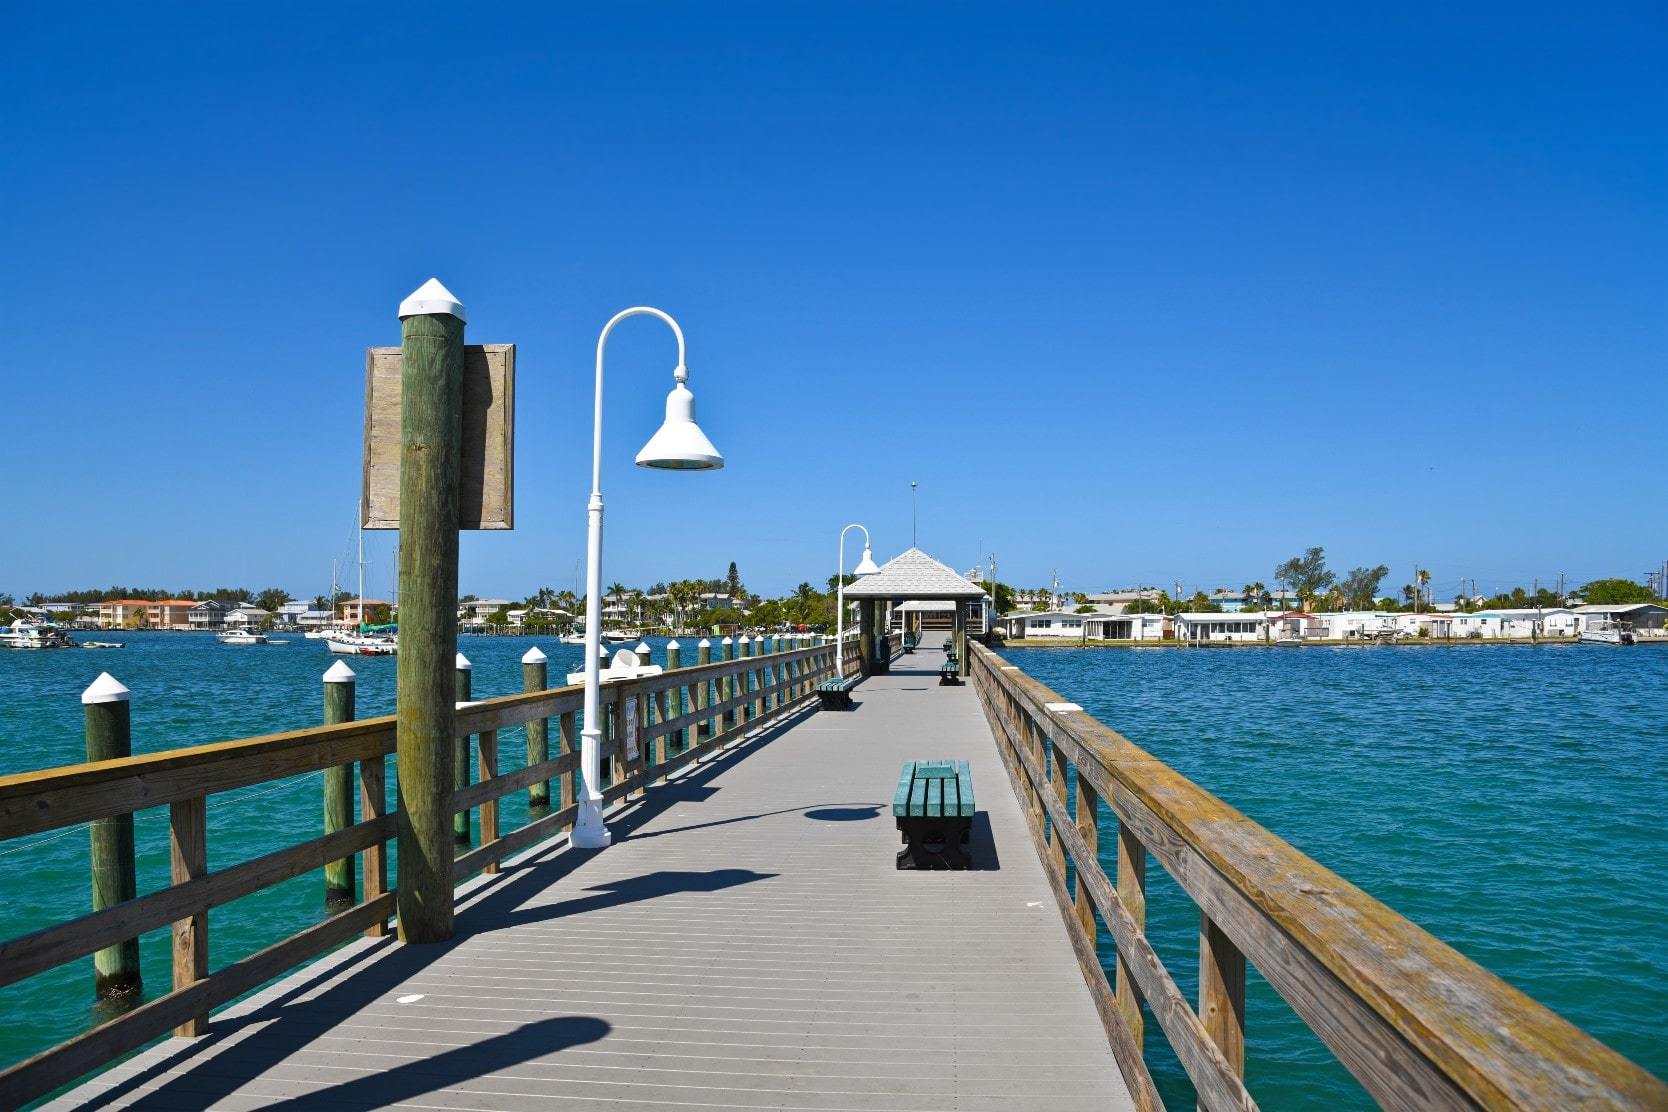 Bradenton Beach Historic Pier in Bradenton, Florida